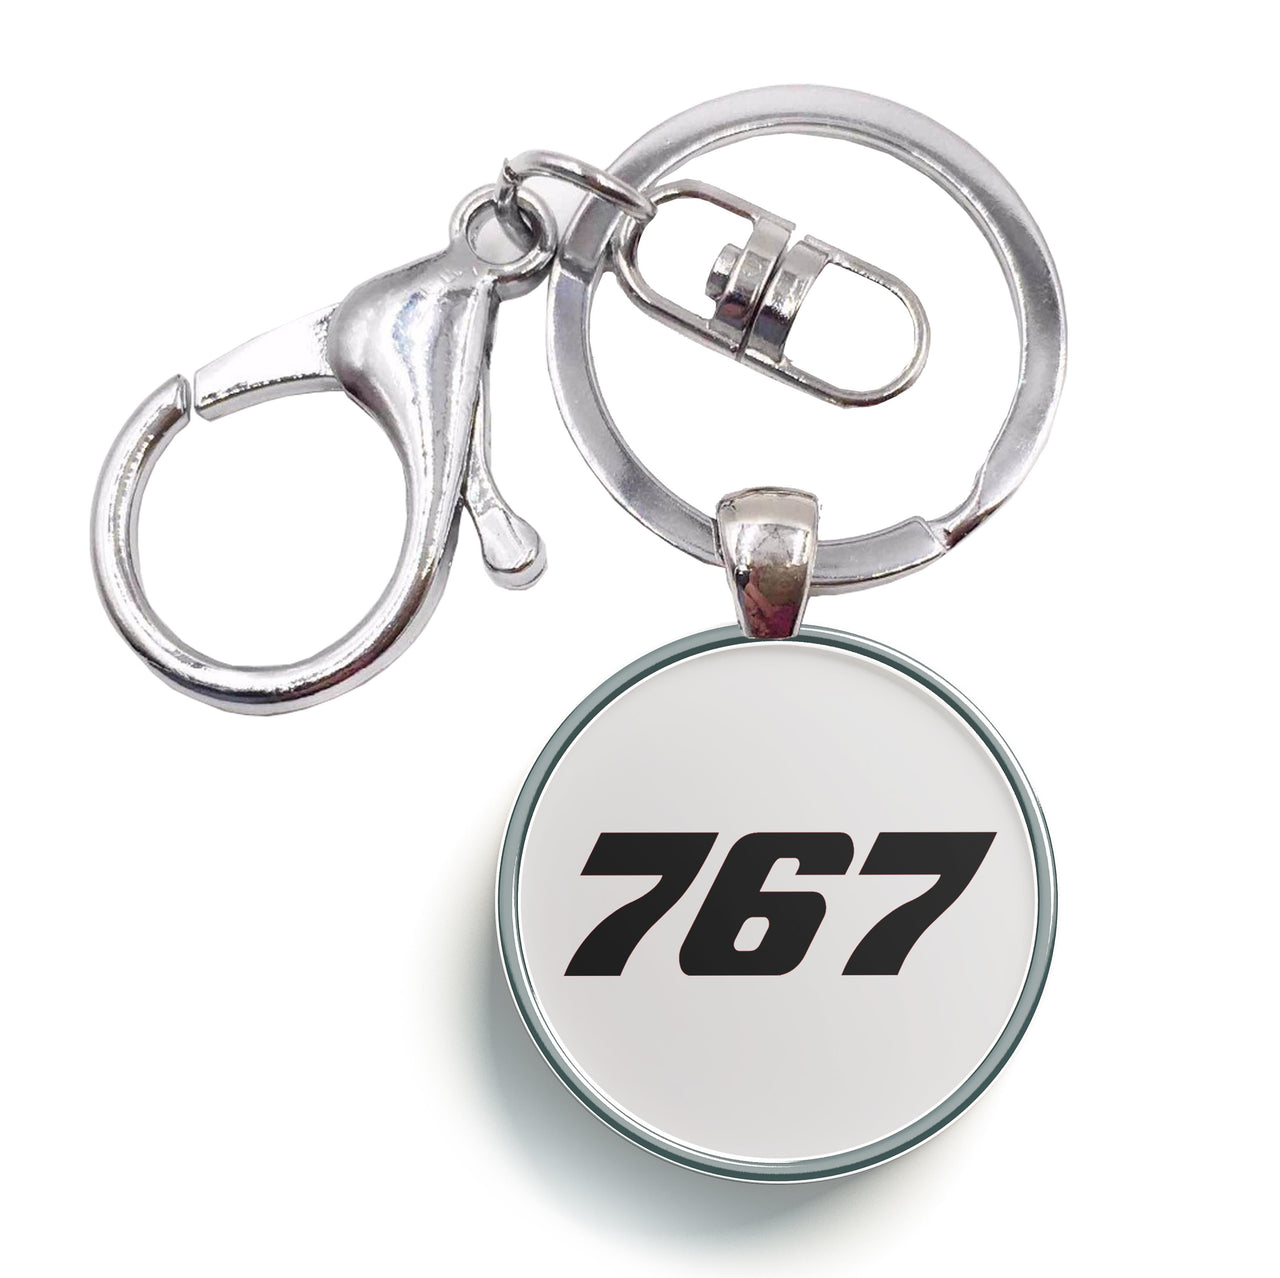 767 Flat Text Designed Circle Key Chains